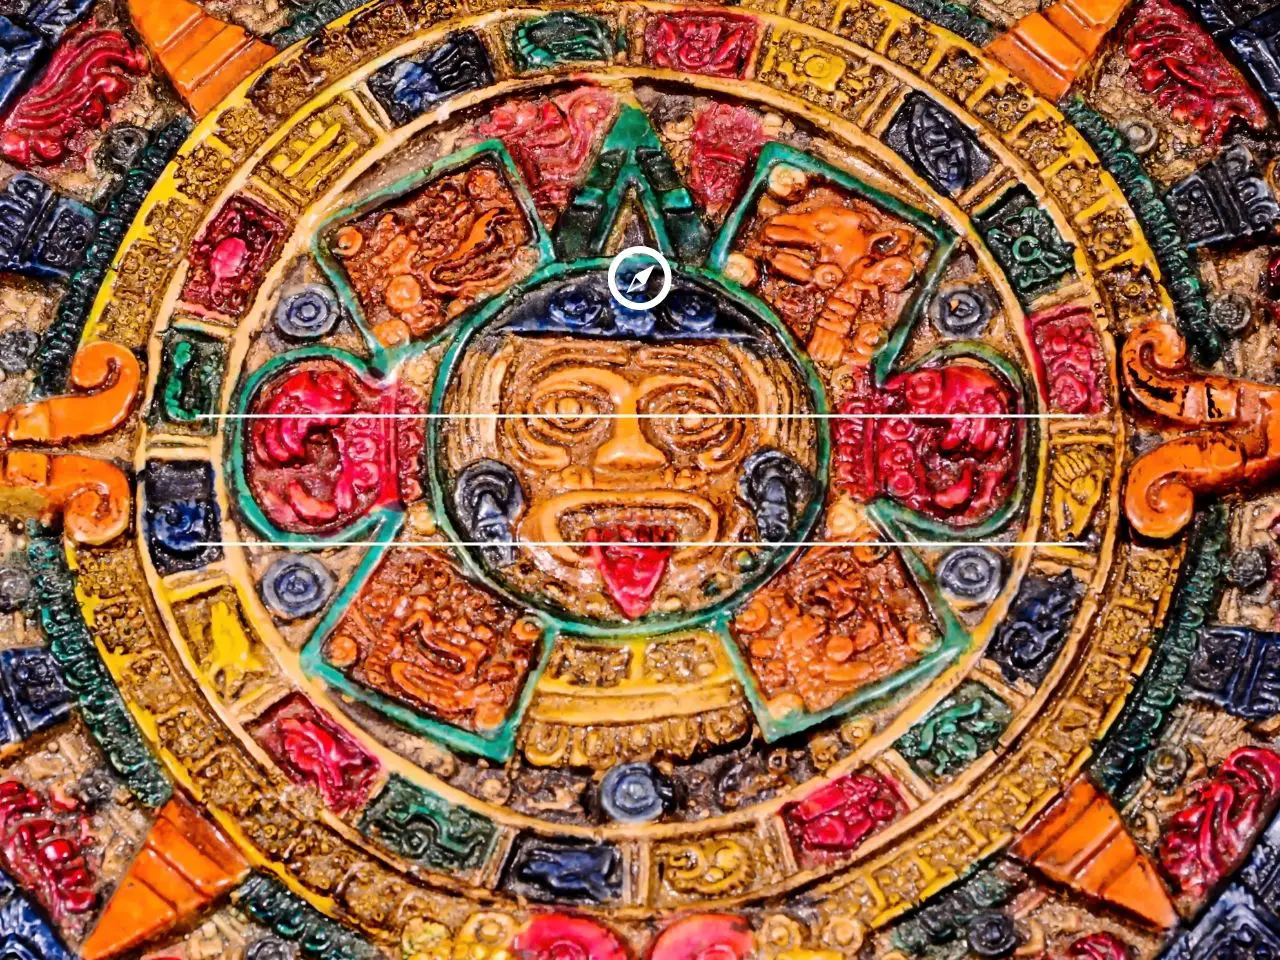 The Mayan Customs